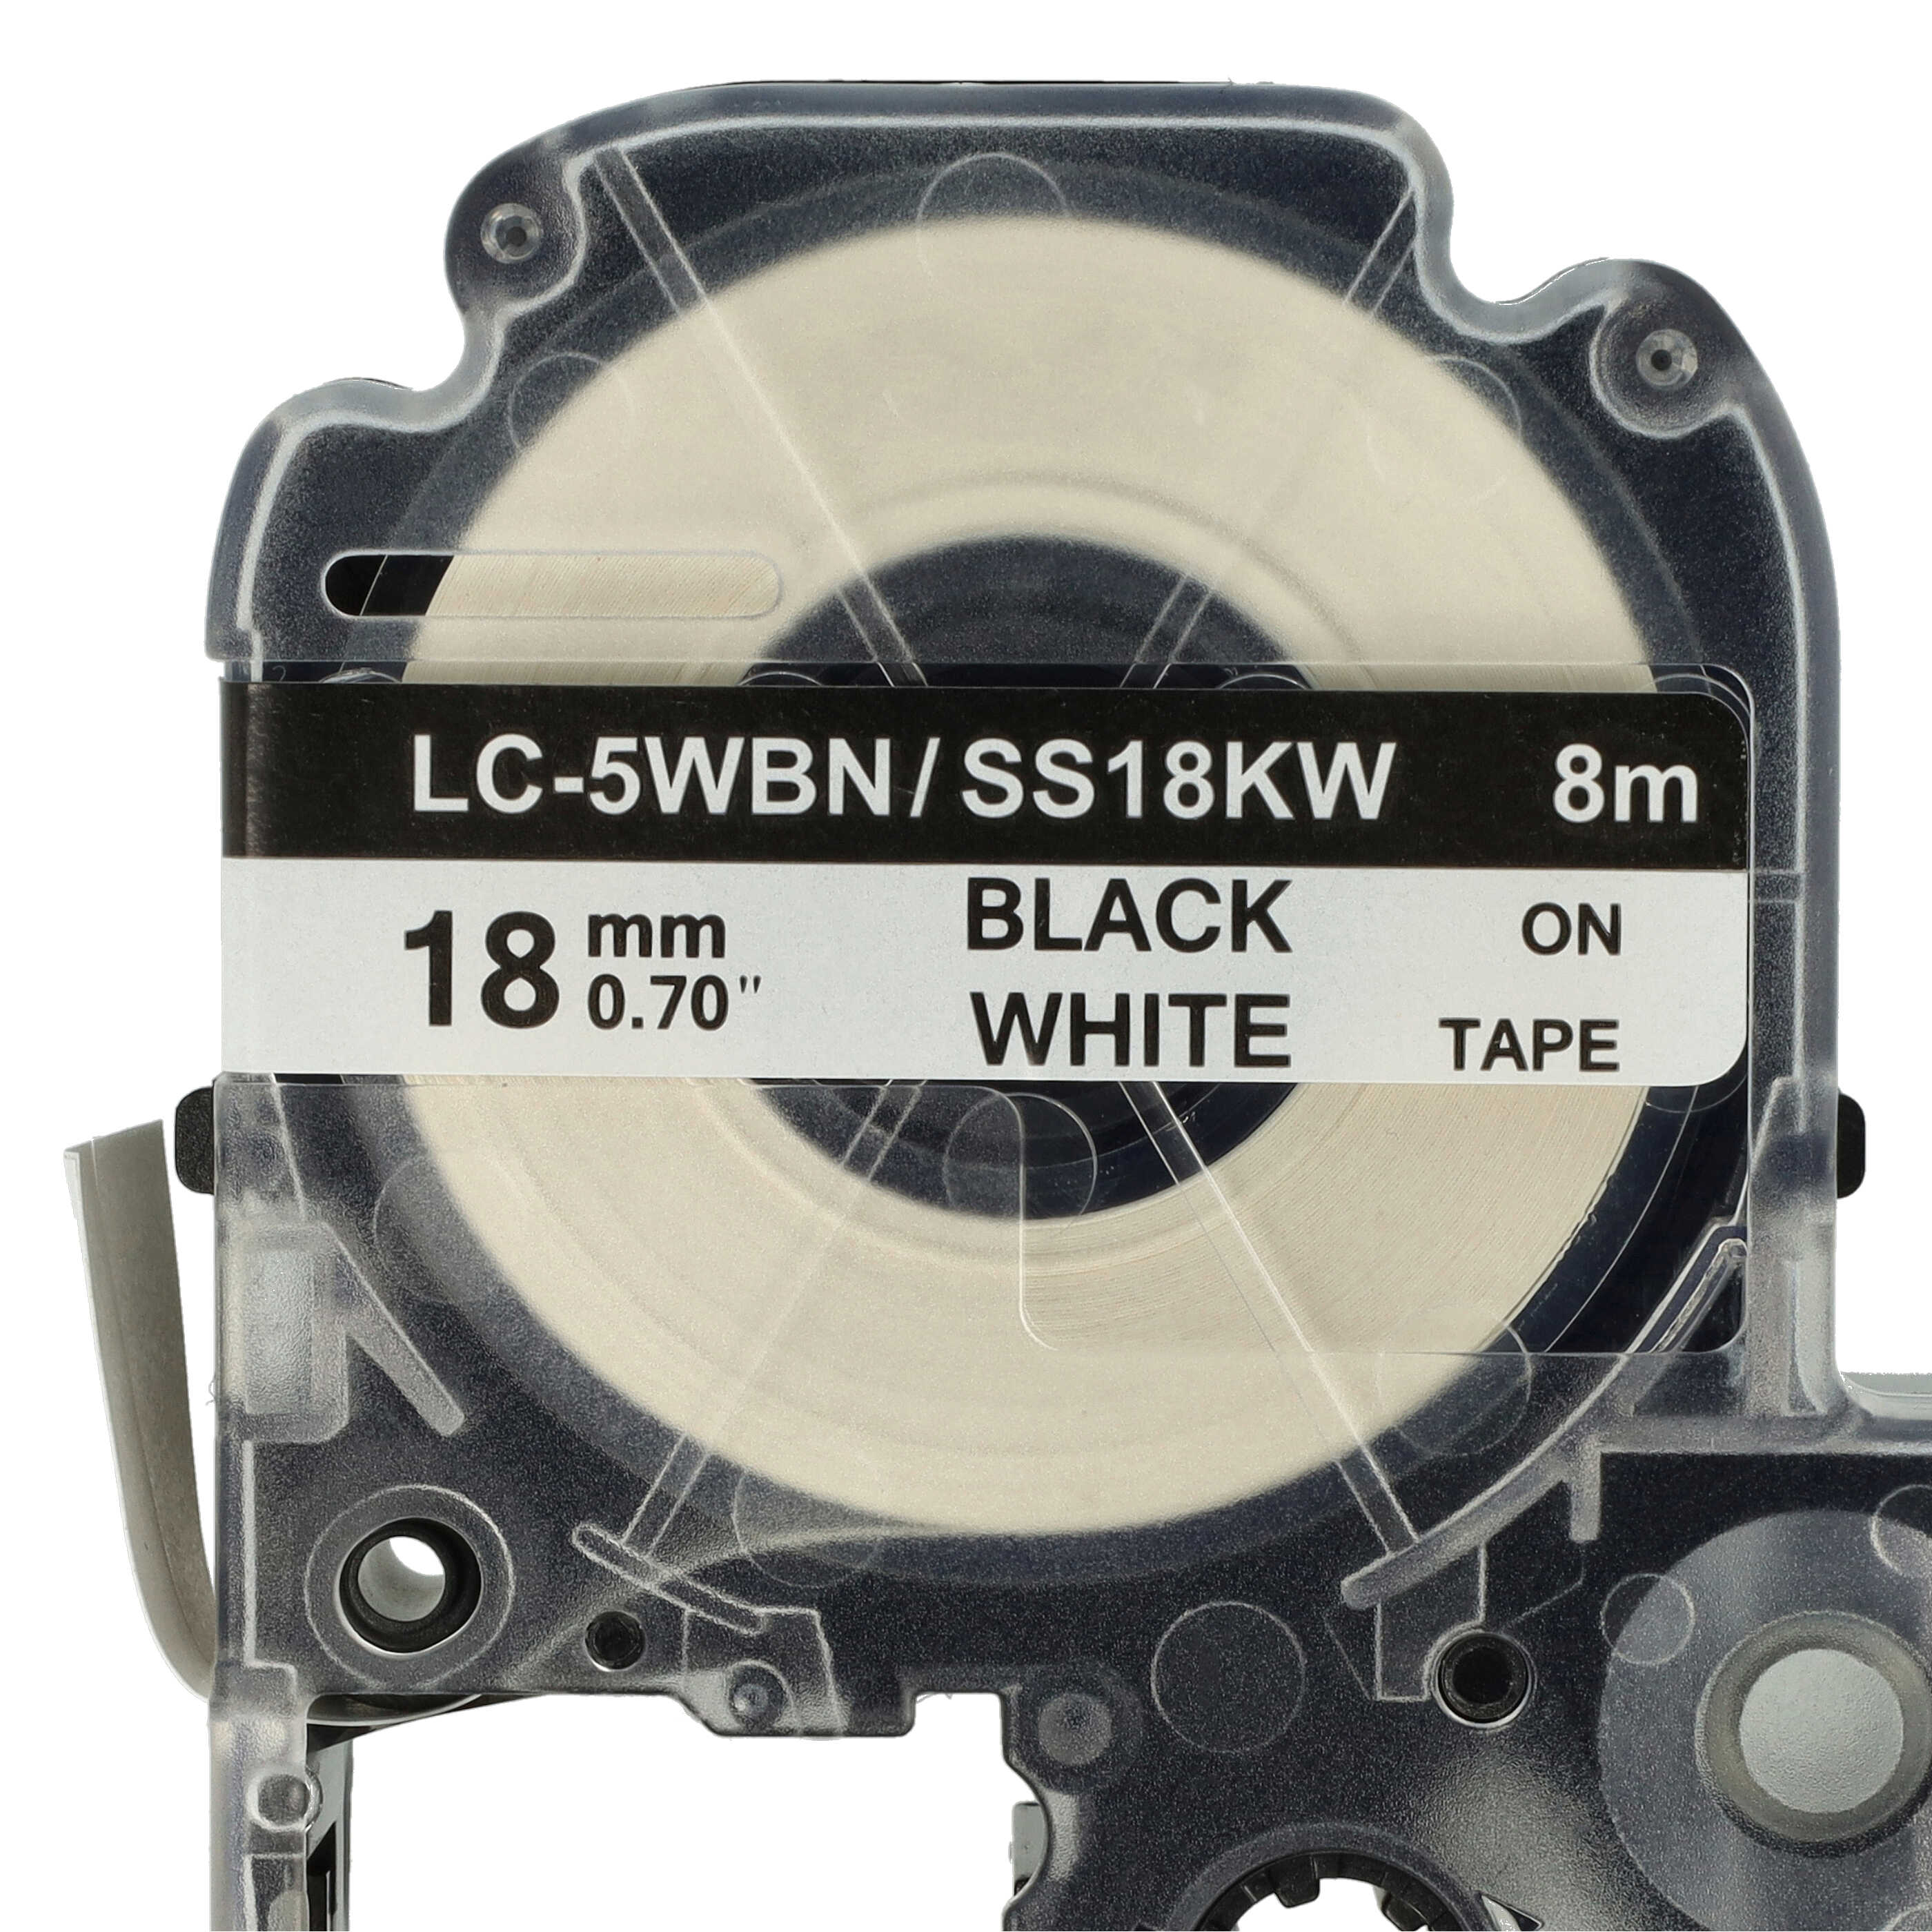 3x Casete cinta escritura reemplaza Epson SS18KW, LC-5WBN Negro su Blanco